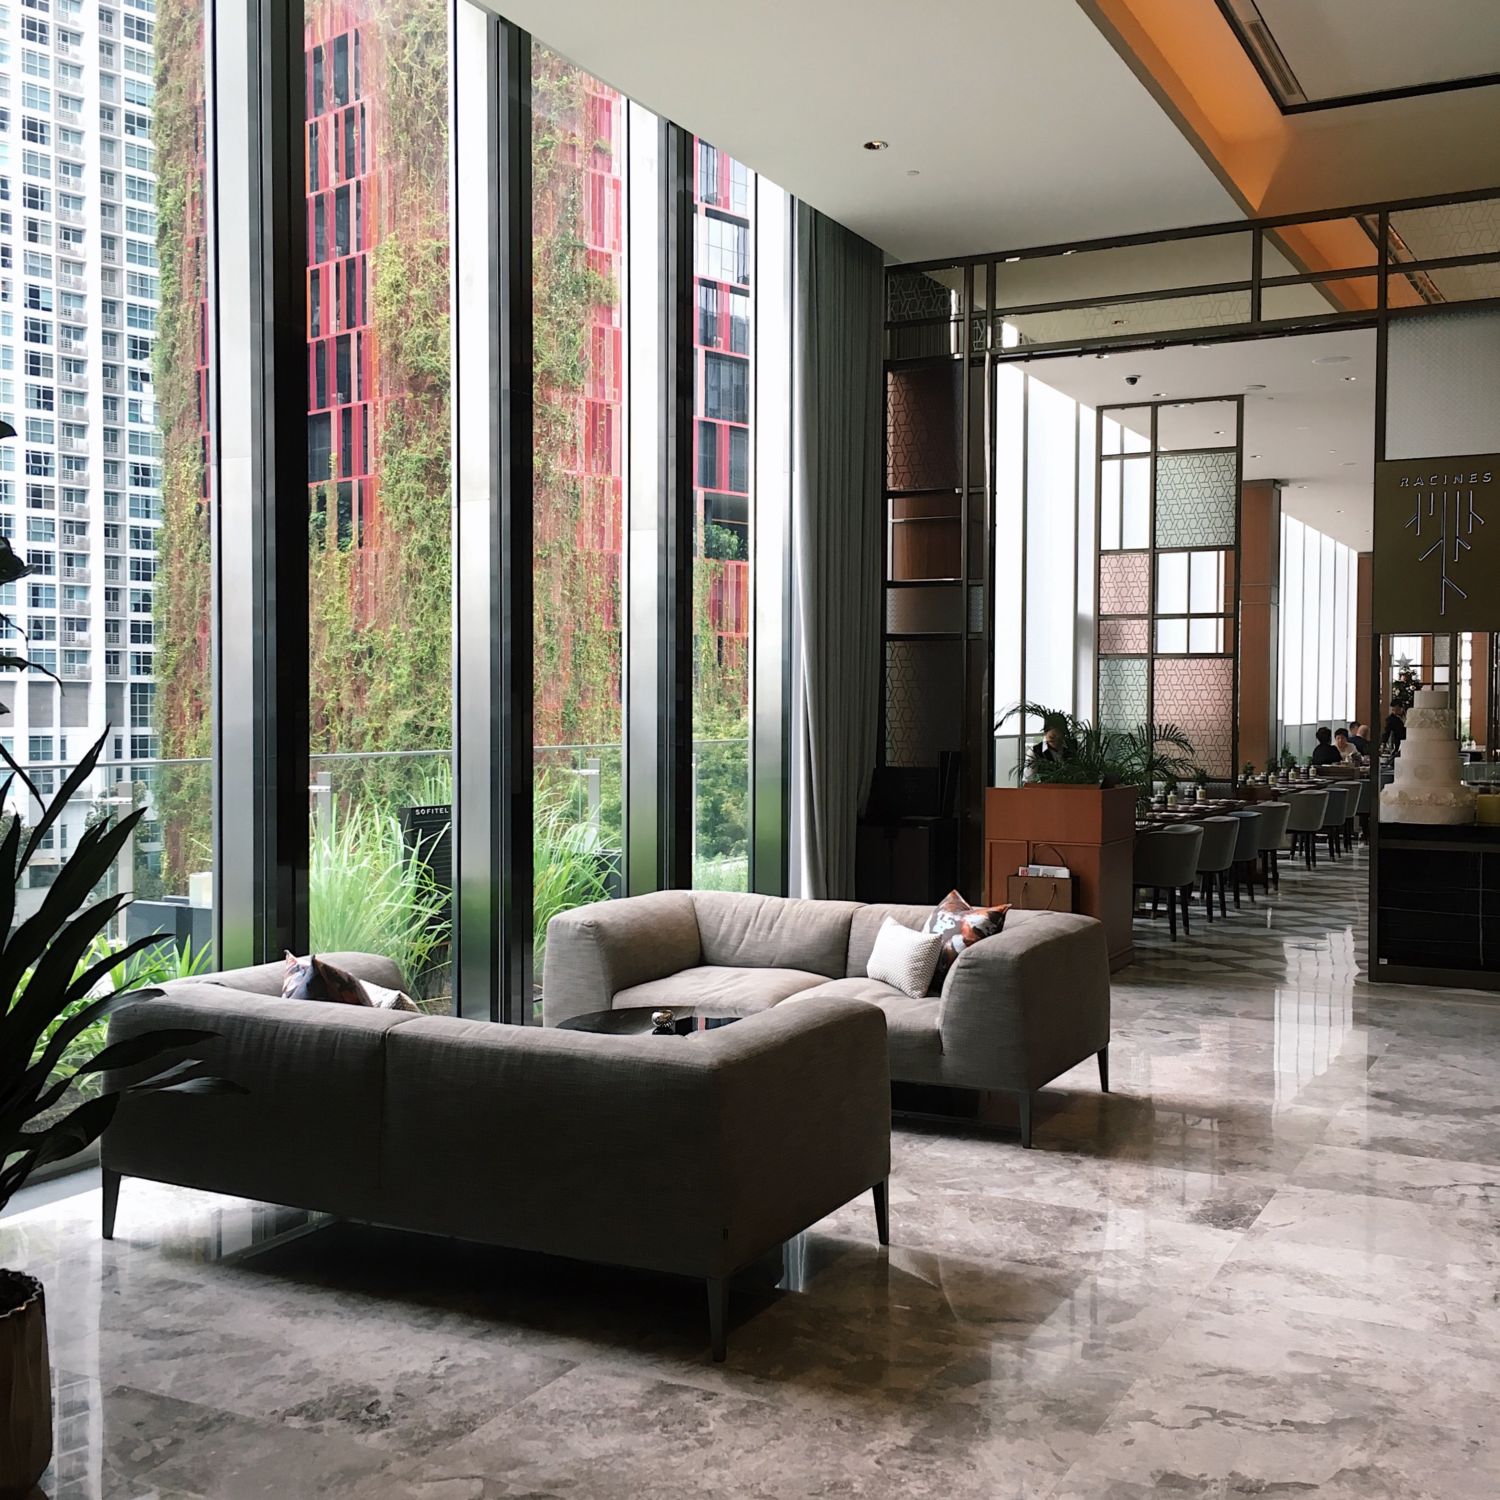 Sofitel Singapore City Centre - Luxury Room